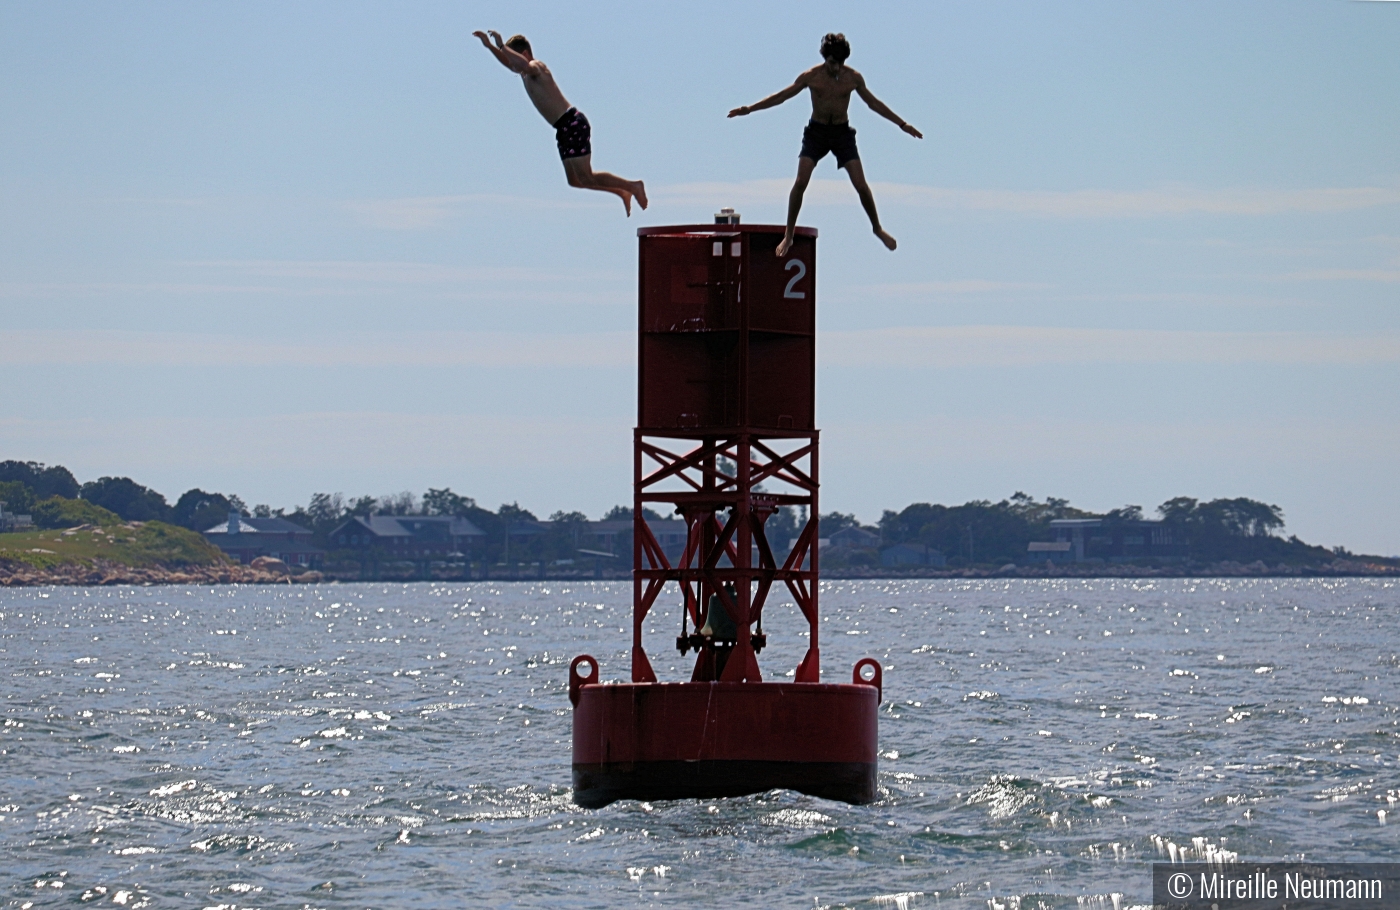 boys jumping off buoy by Mireille Neumann